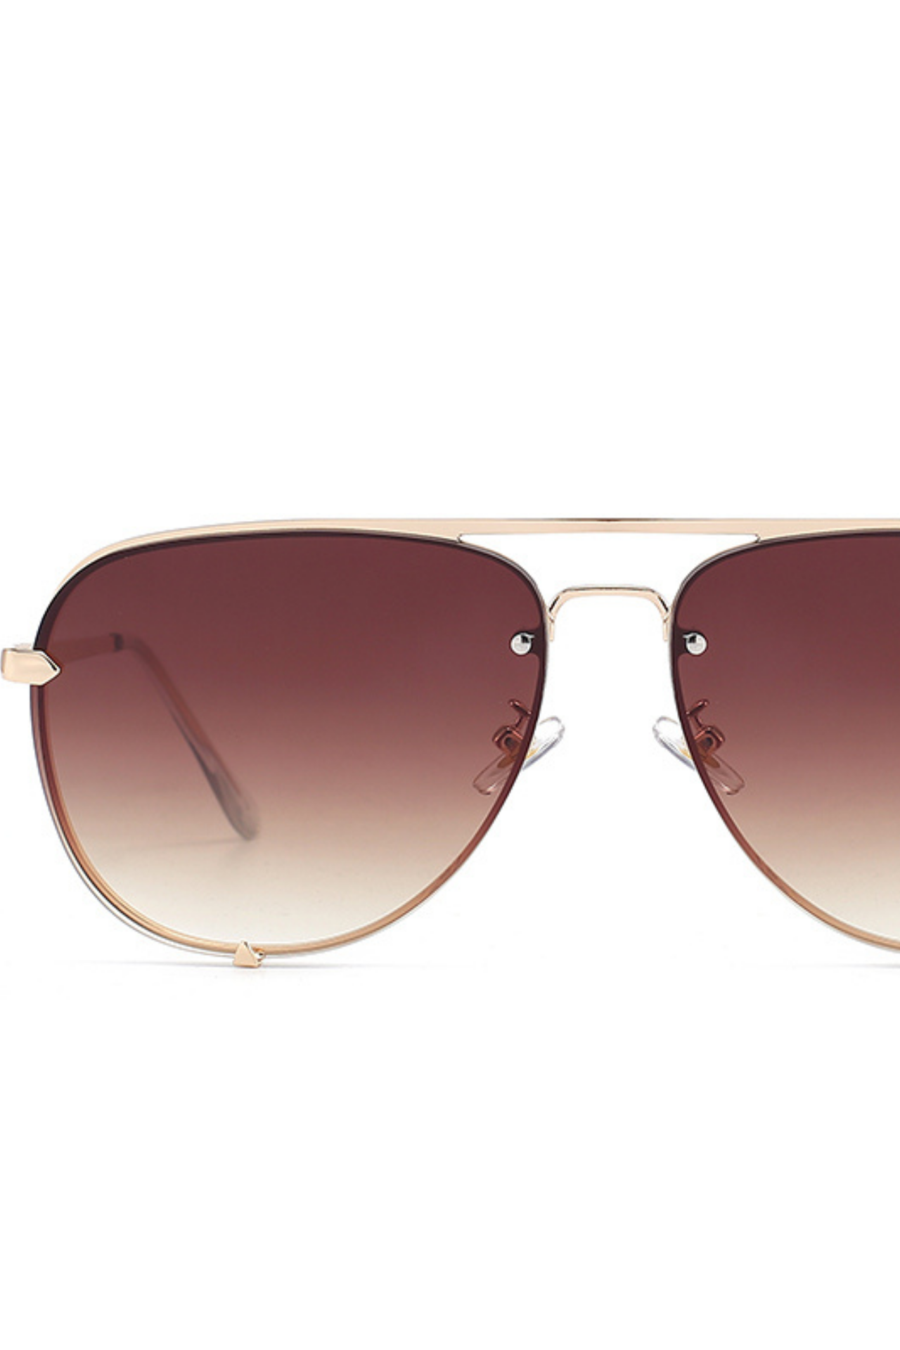 Hotel California Aviator Sunglasses- Gold/Brown